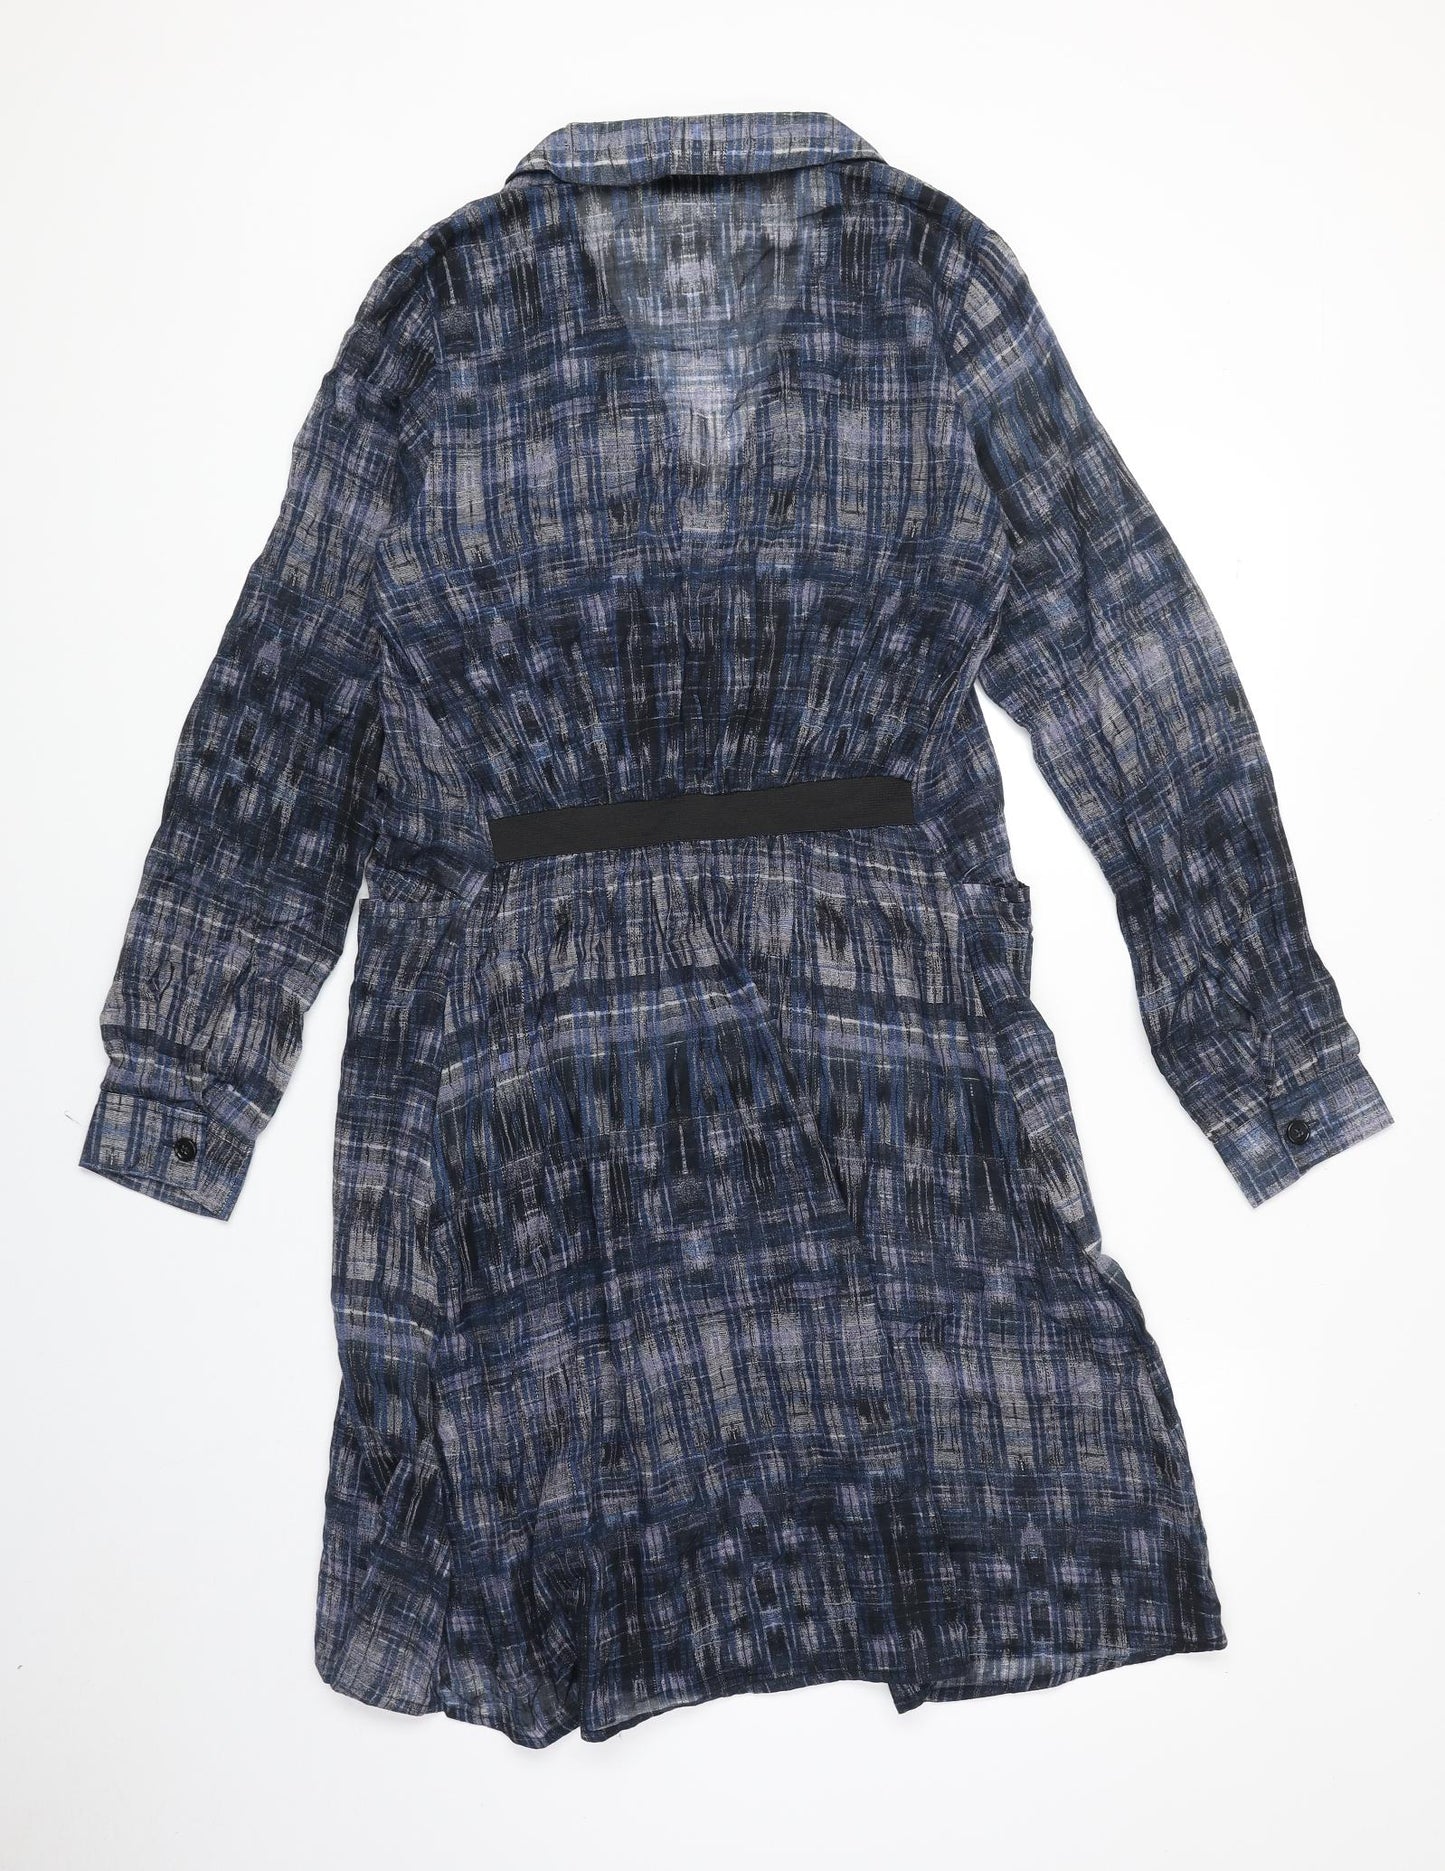 Hope Womens Blue Geometric 100% Cotton Jacket Dress Size 10 Collared Button